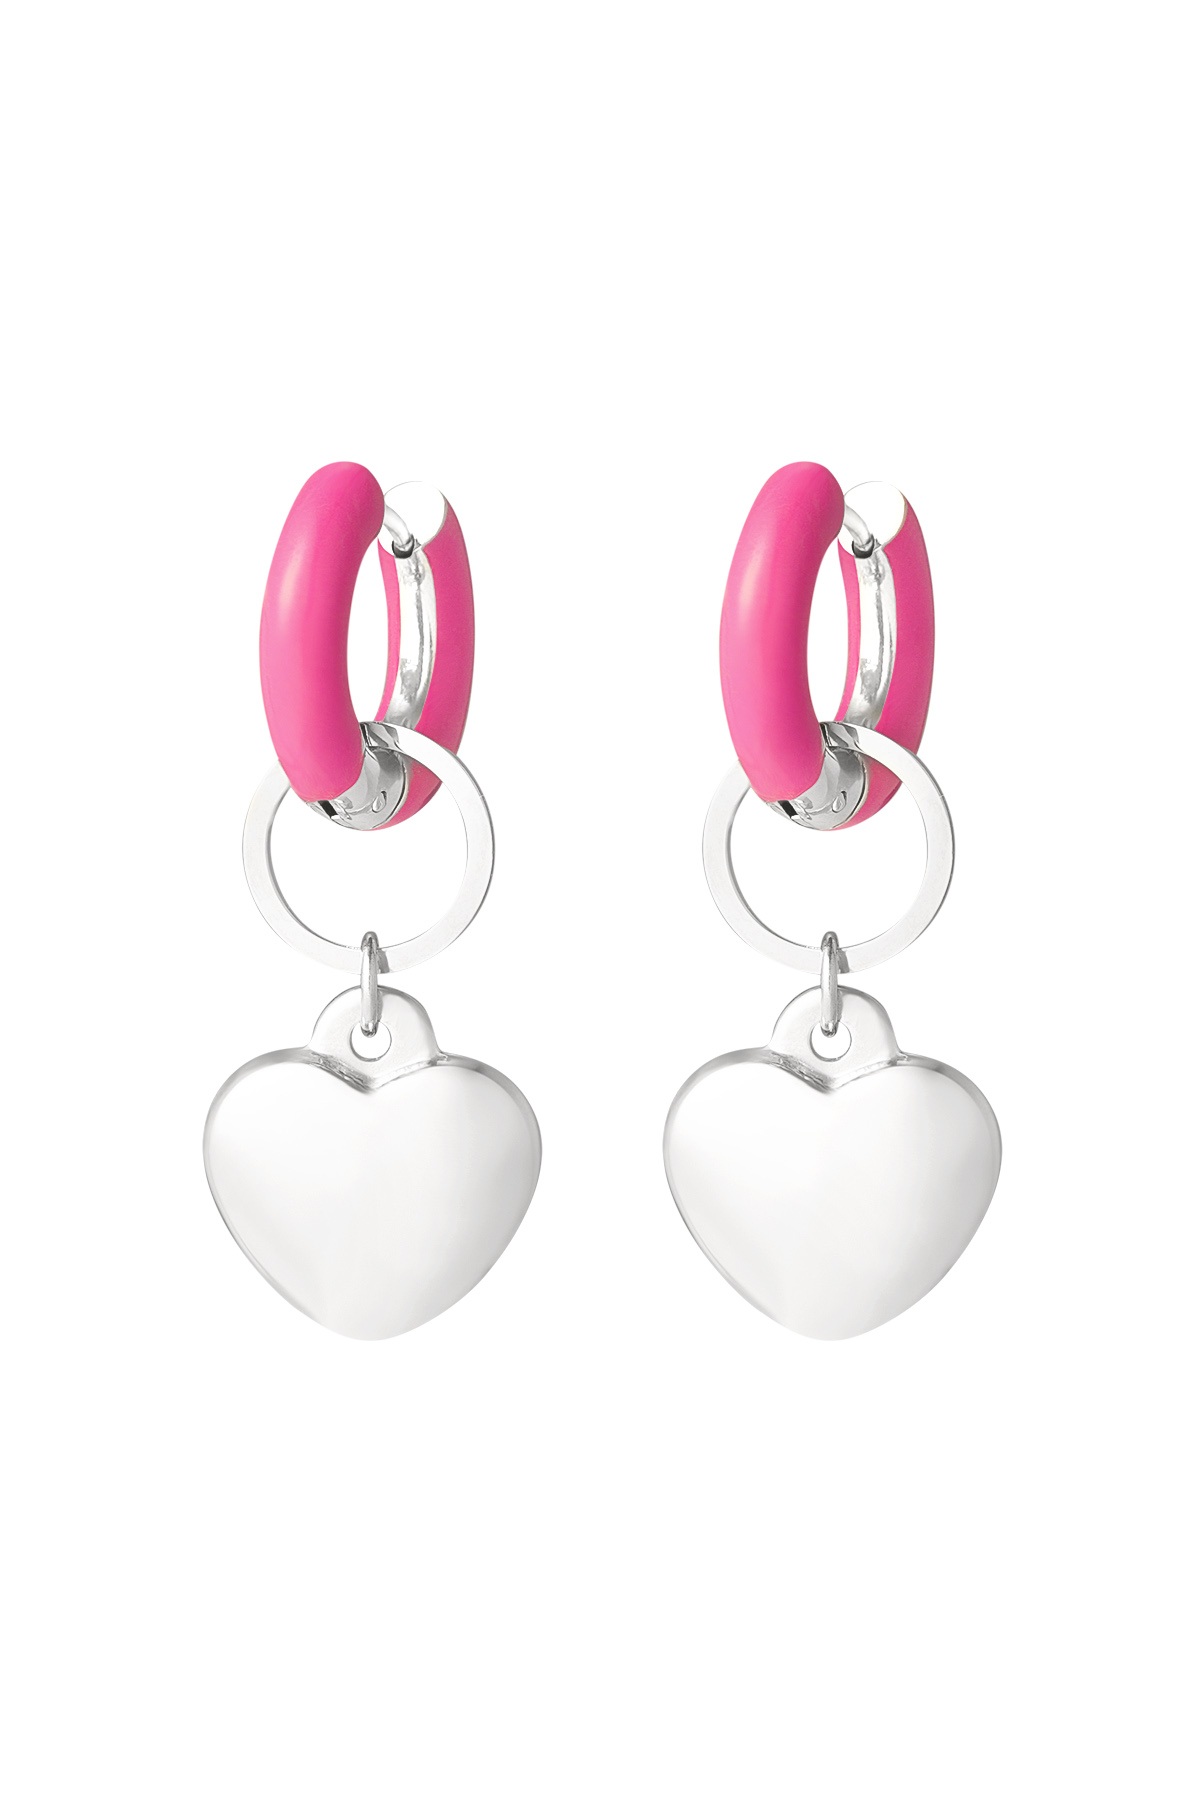 Ohrring farbiger Ring mit Herz rosa - Silber h5 